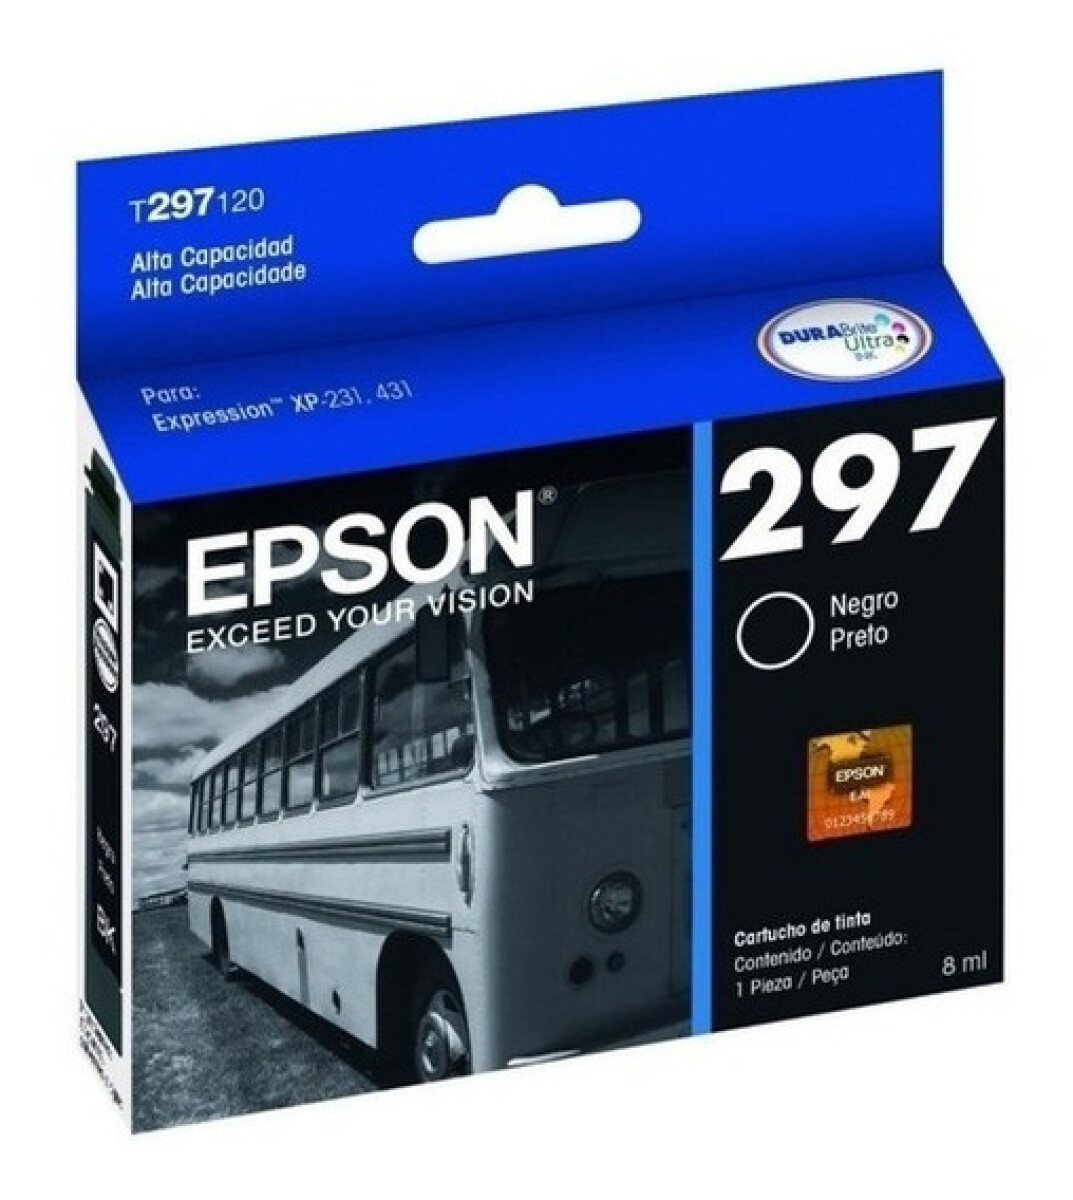 EPSON T297120 NEGRO ALTA CAPACIDAD XP231/241/431/441 8ML - Epson T297120 Negro Alta Capacidad Xp231/241/431/441 8ml 